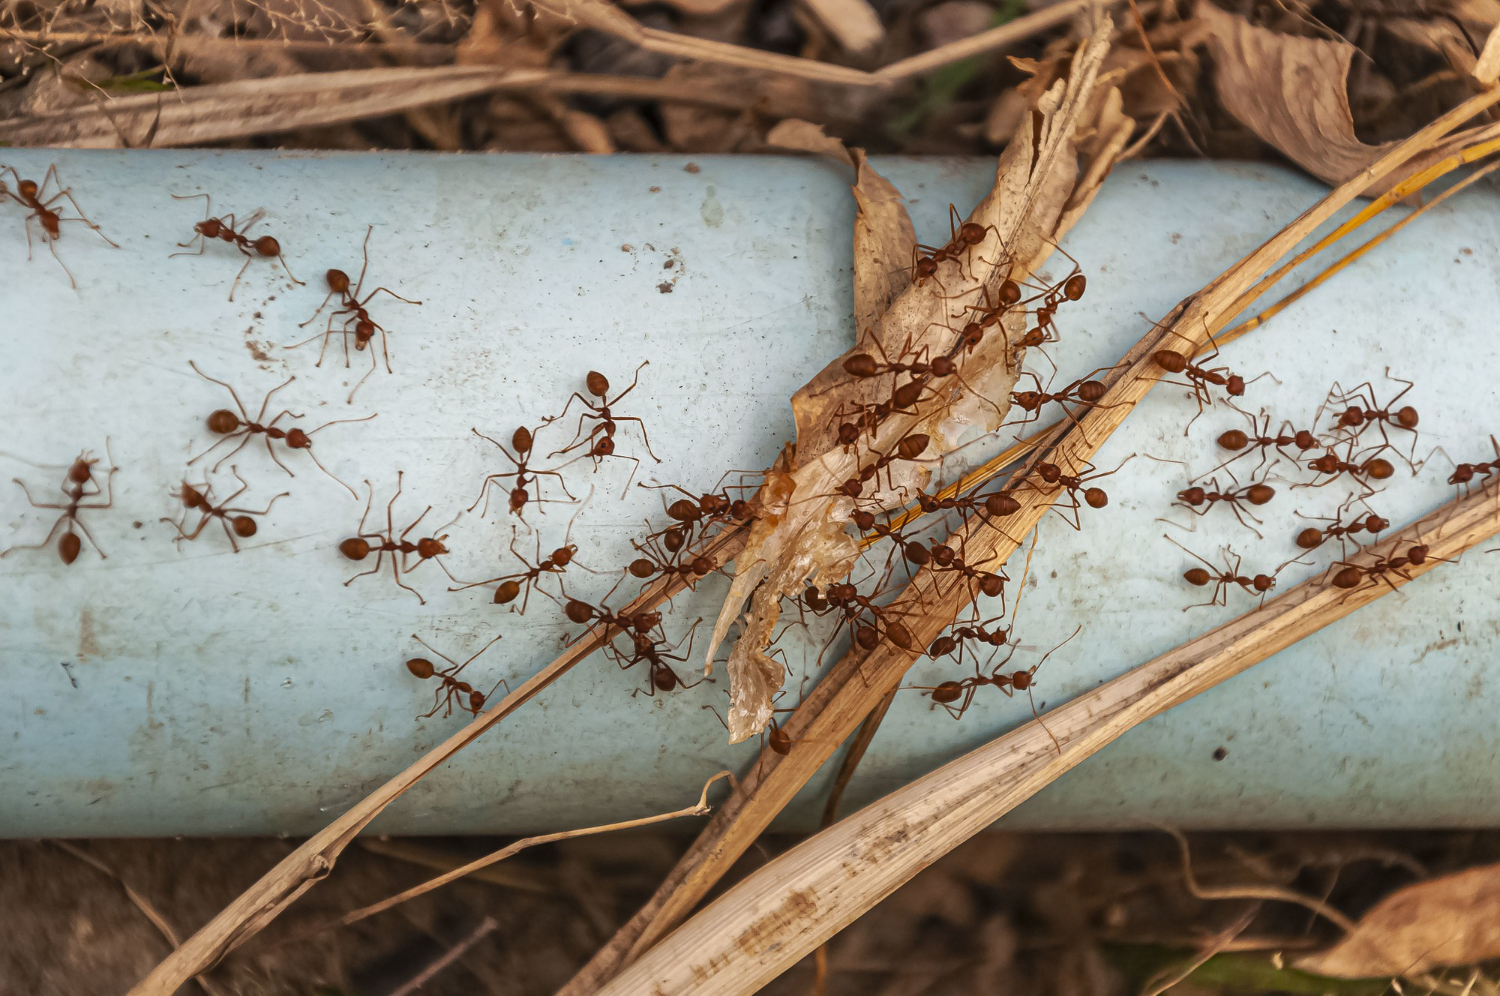 ant pest outbreak